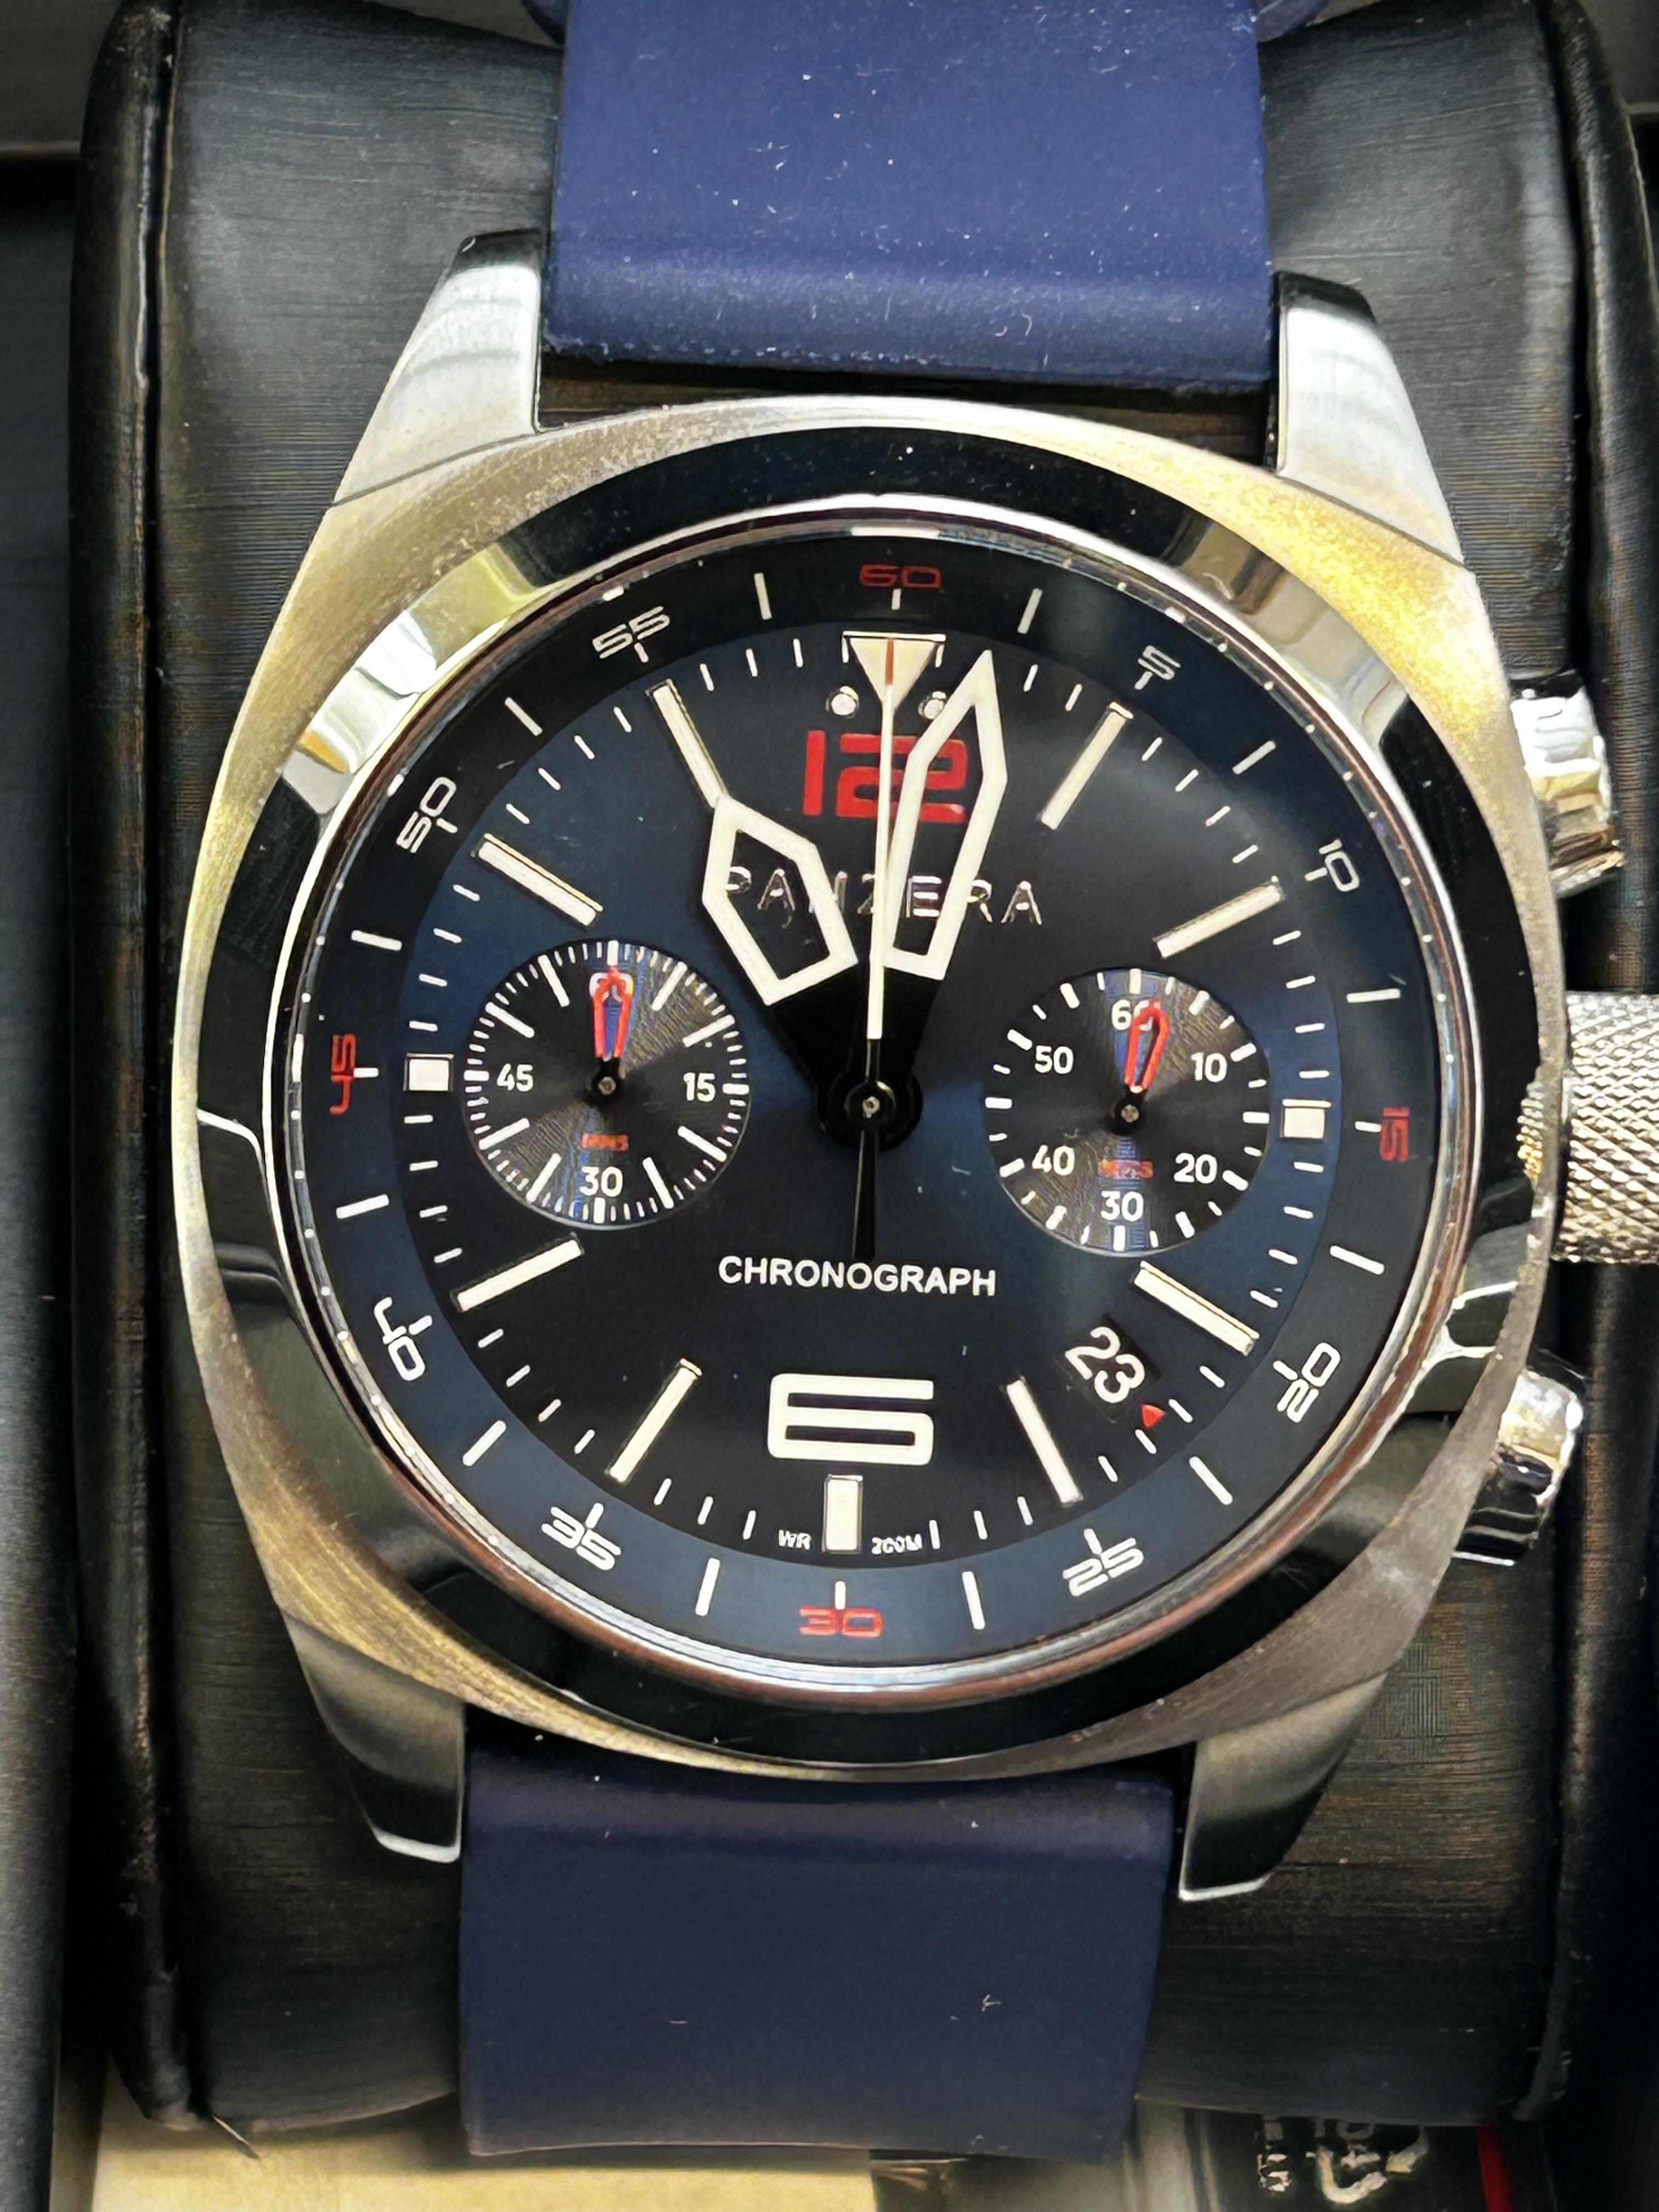 Panzera chronograph wristwatch, excellent conditio